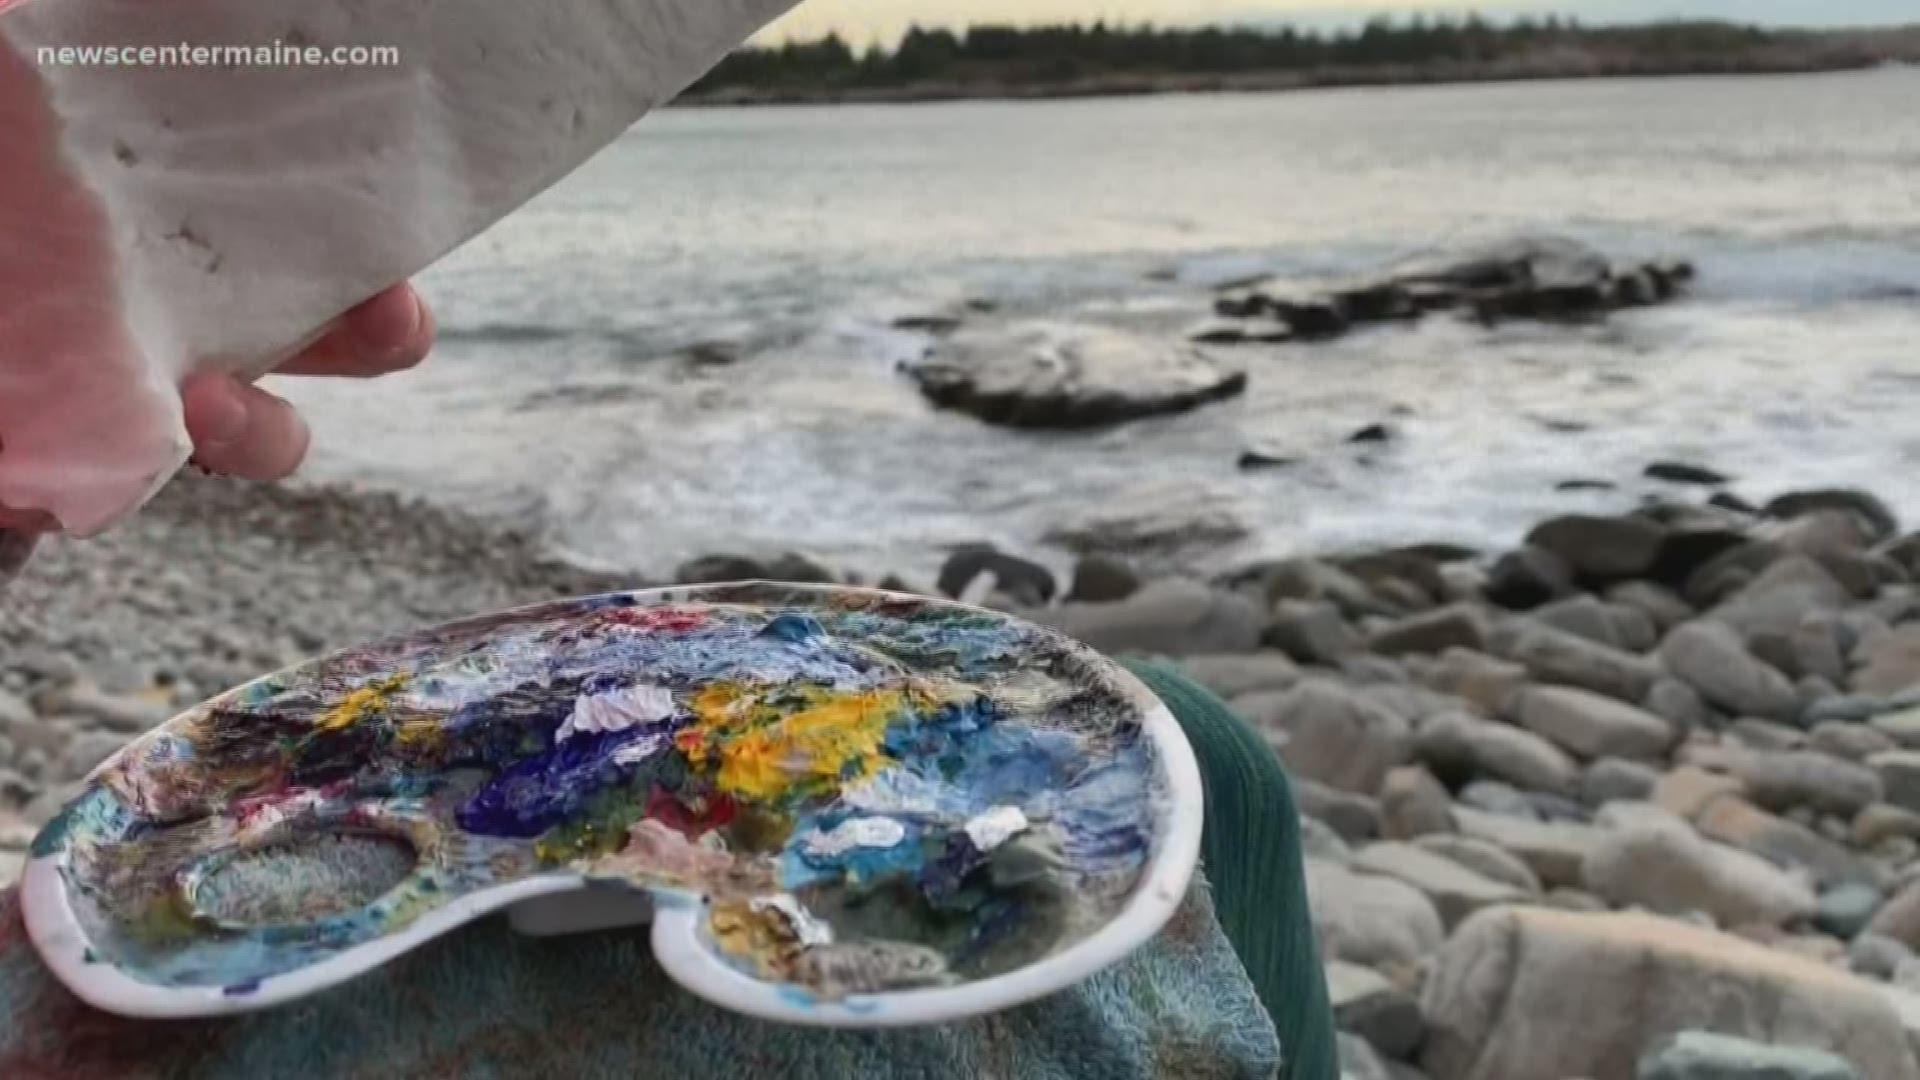 Artist turns trash into craft, helping environment